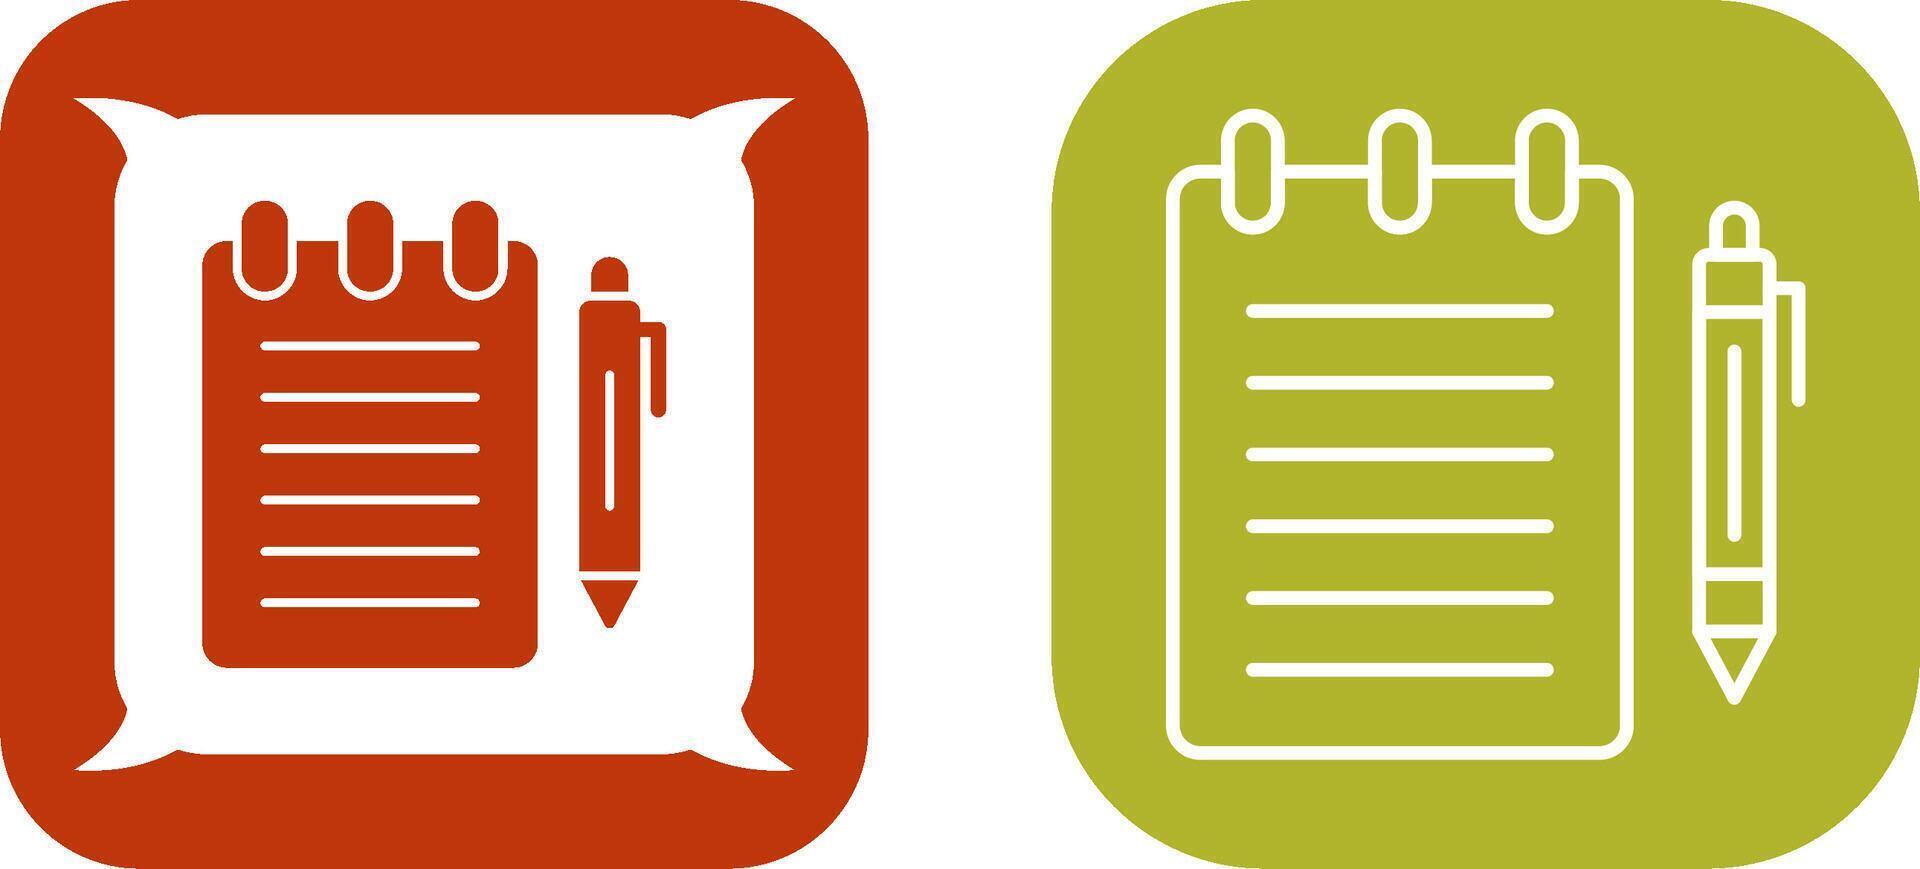 Notepad Icon Design vector